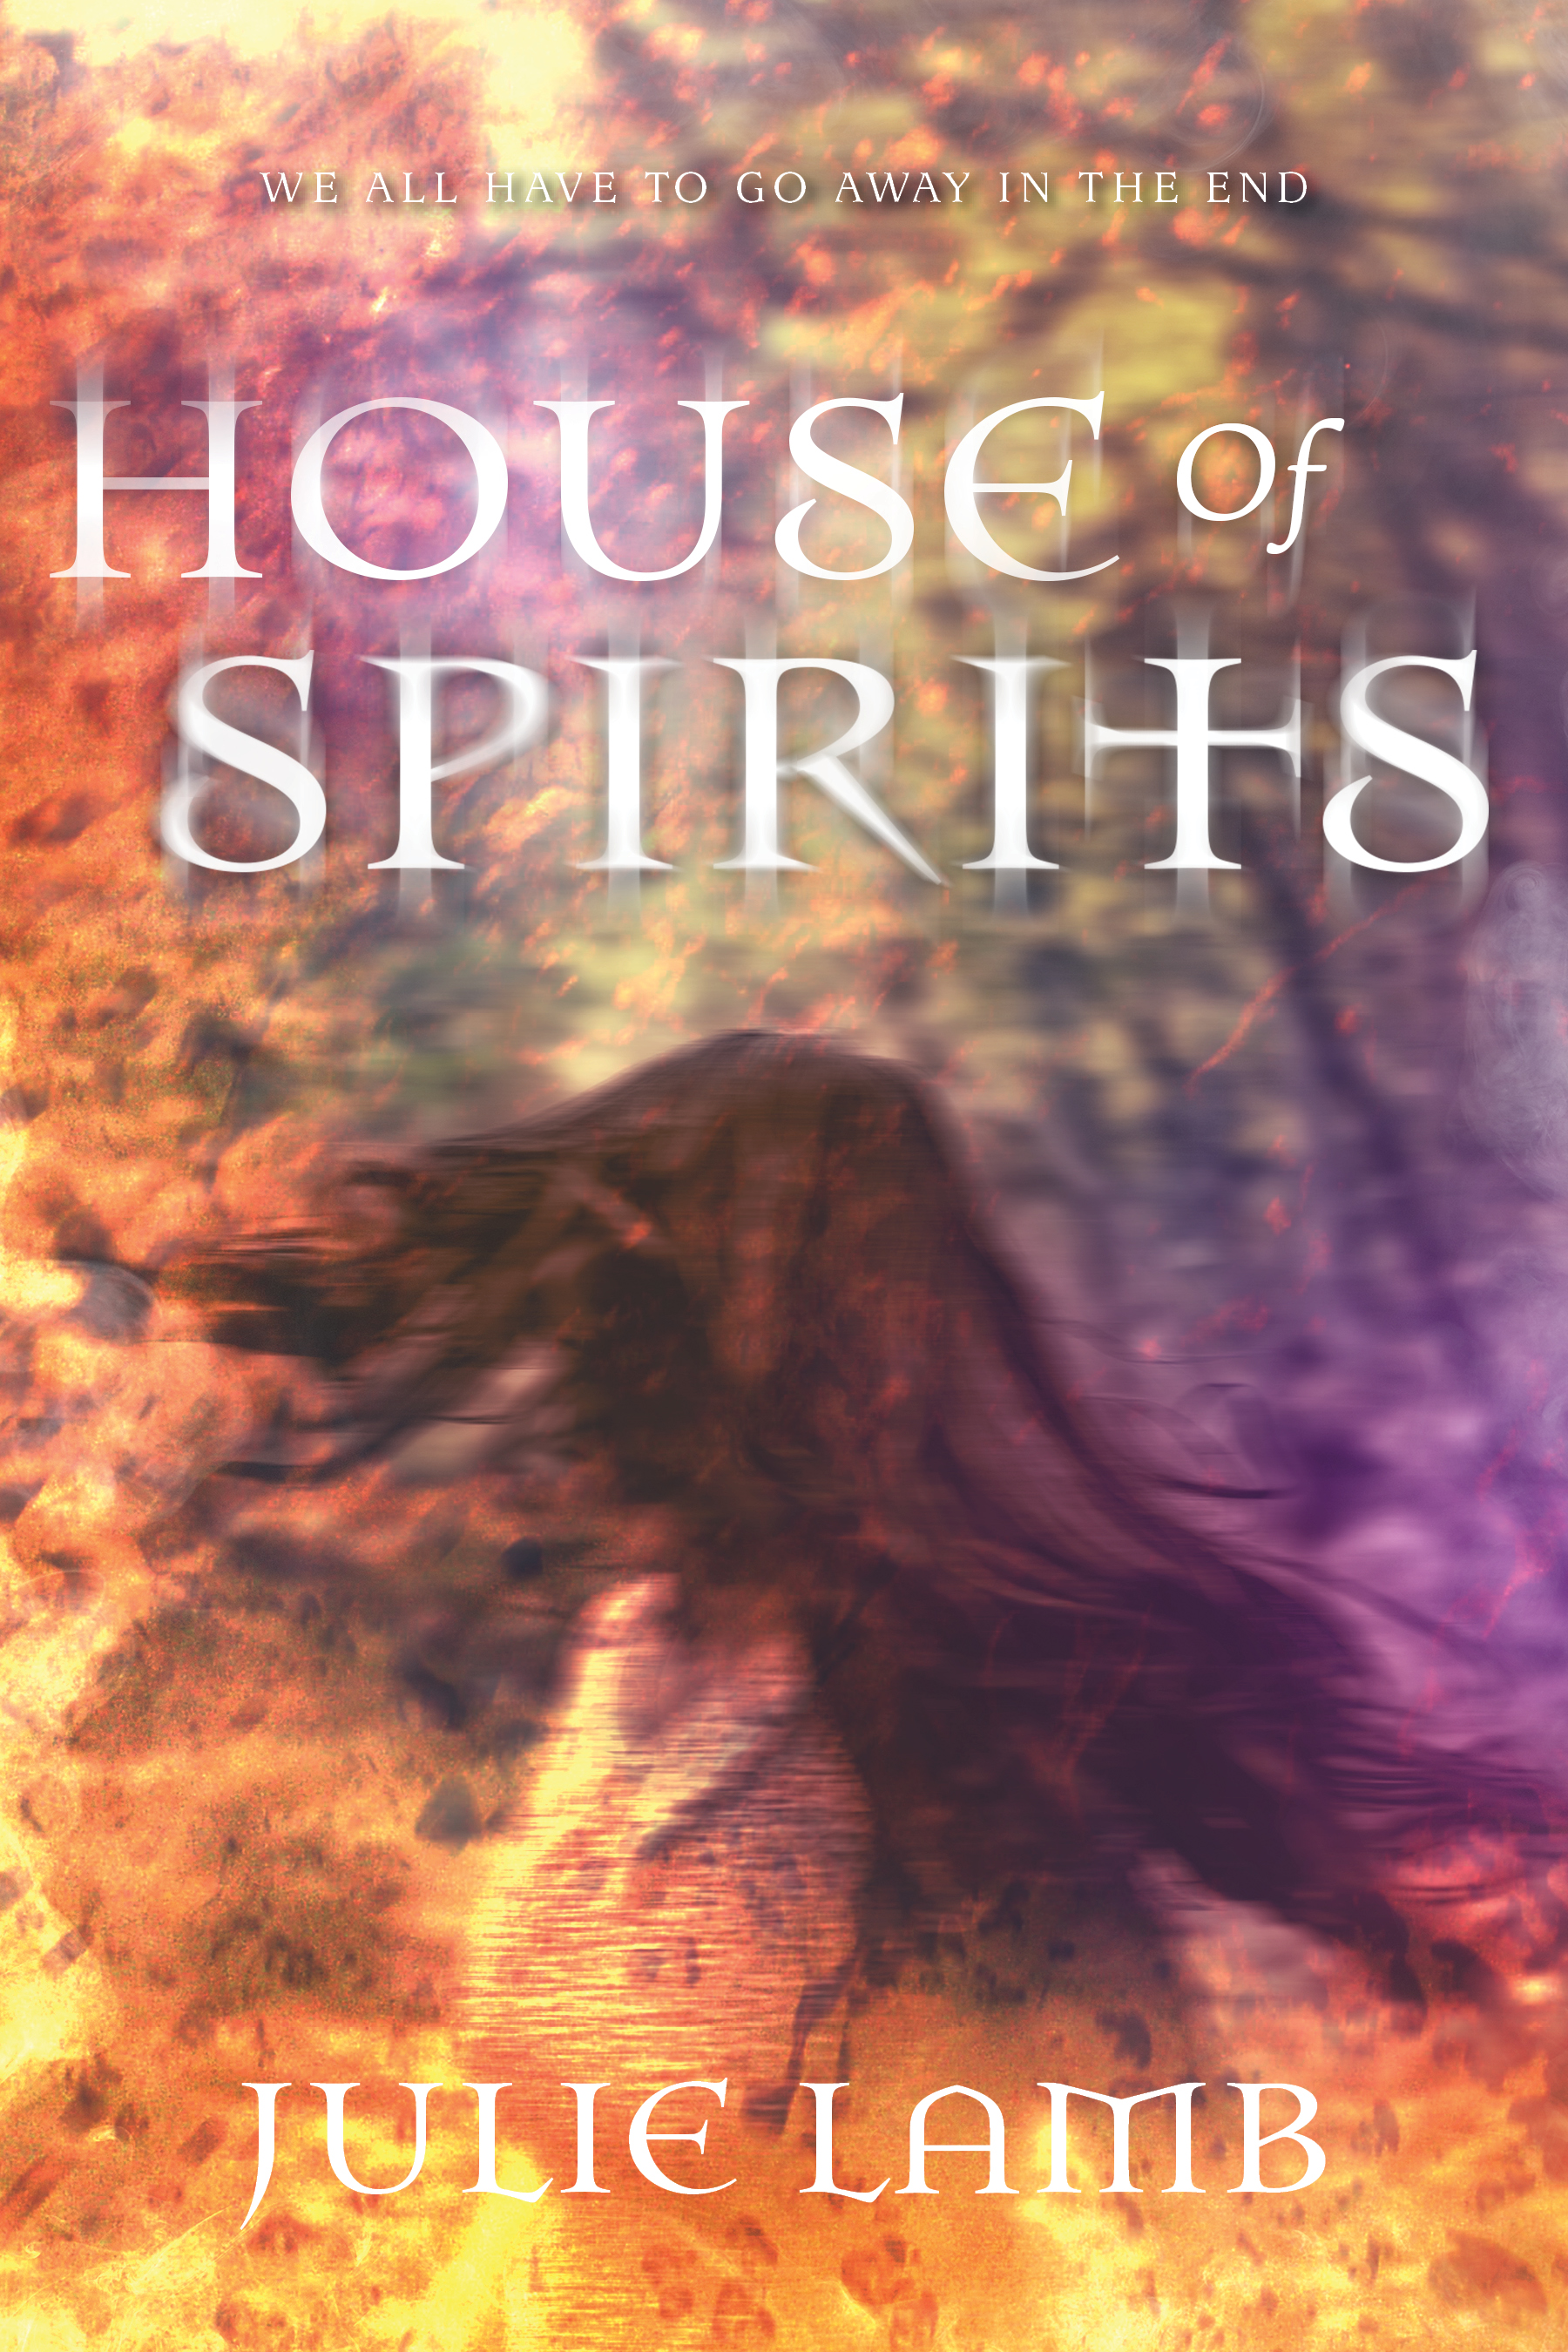 House of Spirirts cover.jpg